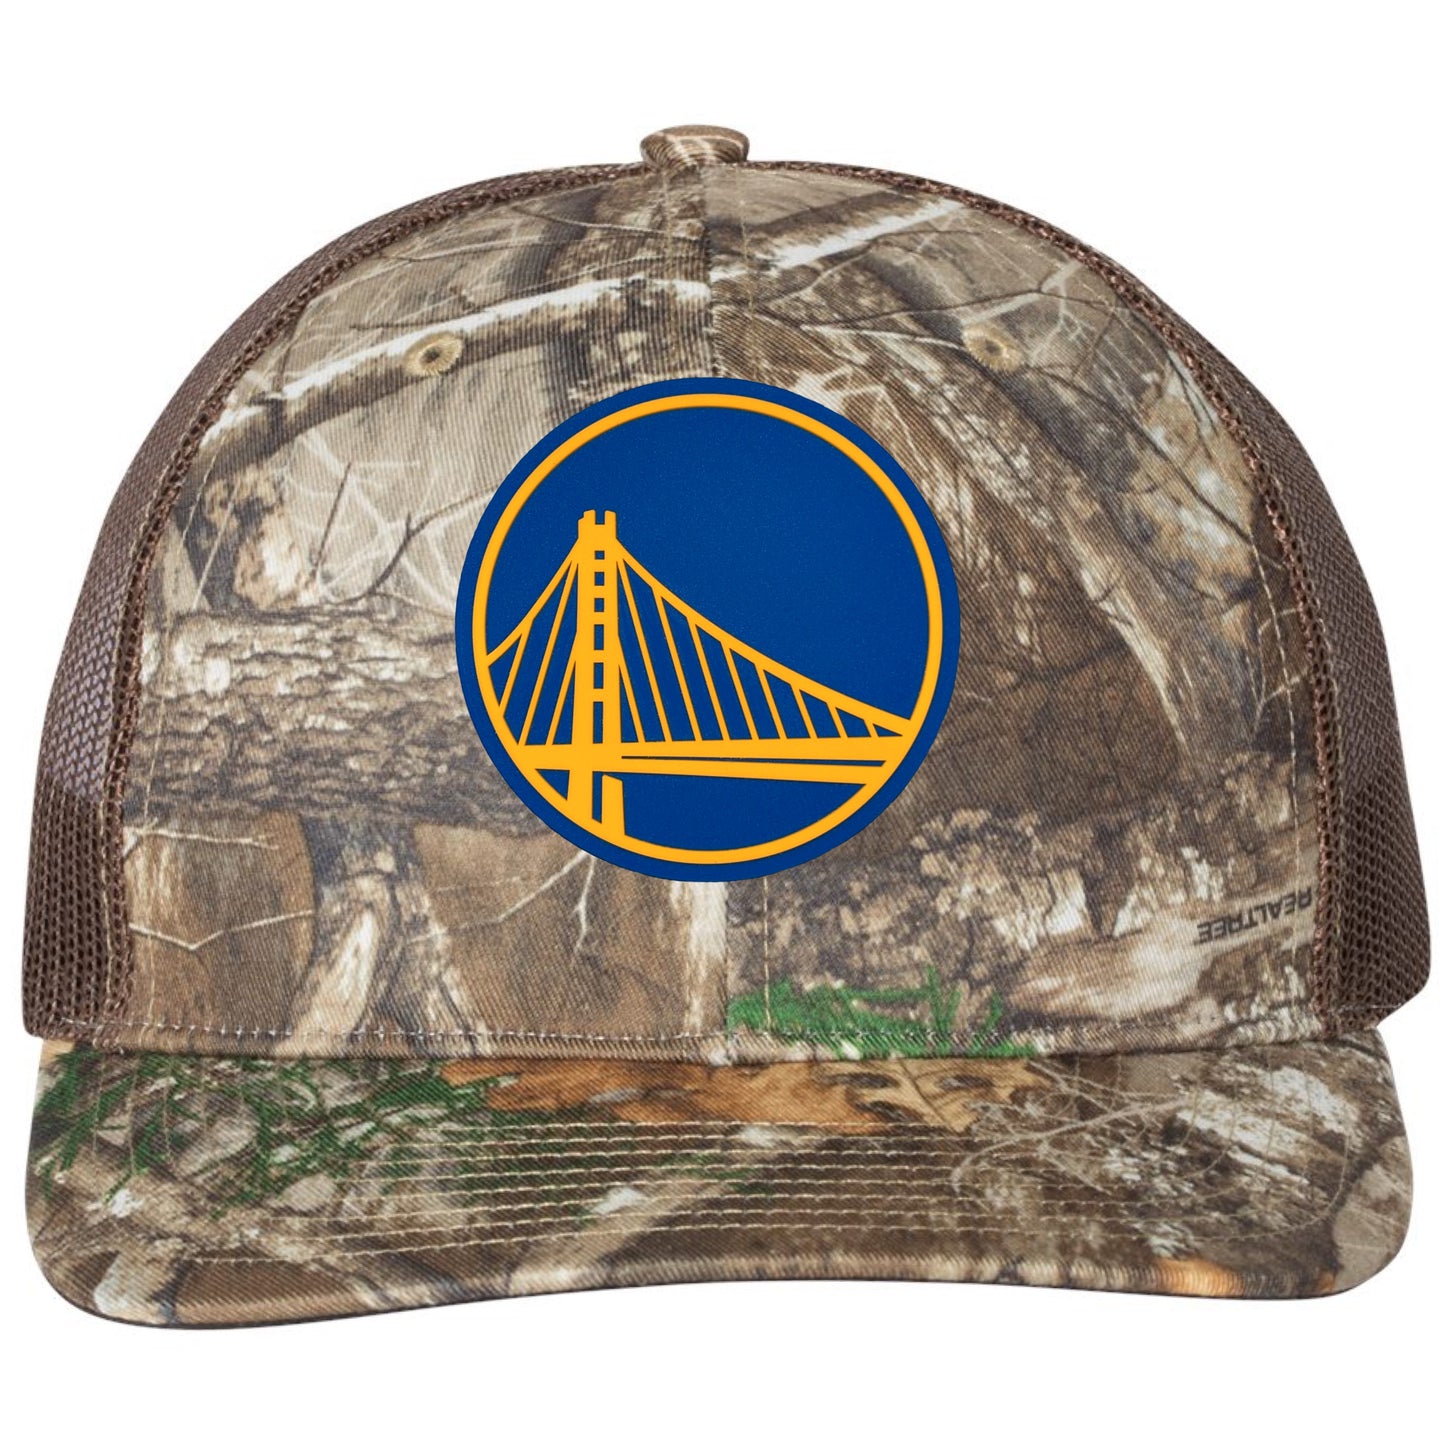 Golden State Warriors 3D Patterned Snapback Trucker Hat- Realtree Edge/ Brown - Ten Gallon Hat Co.